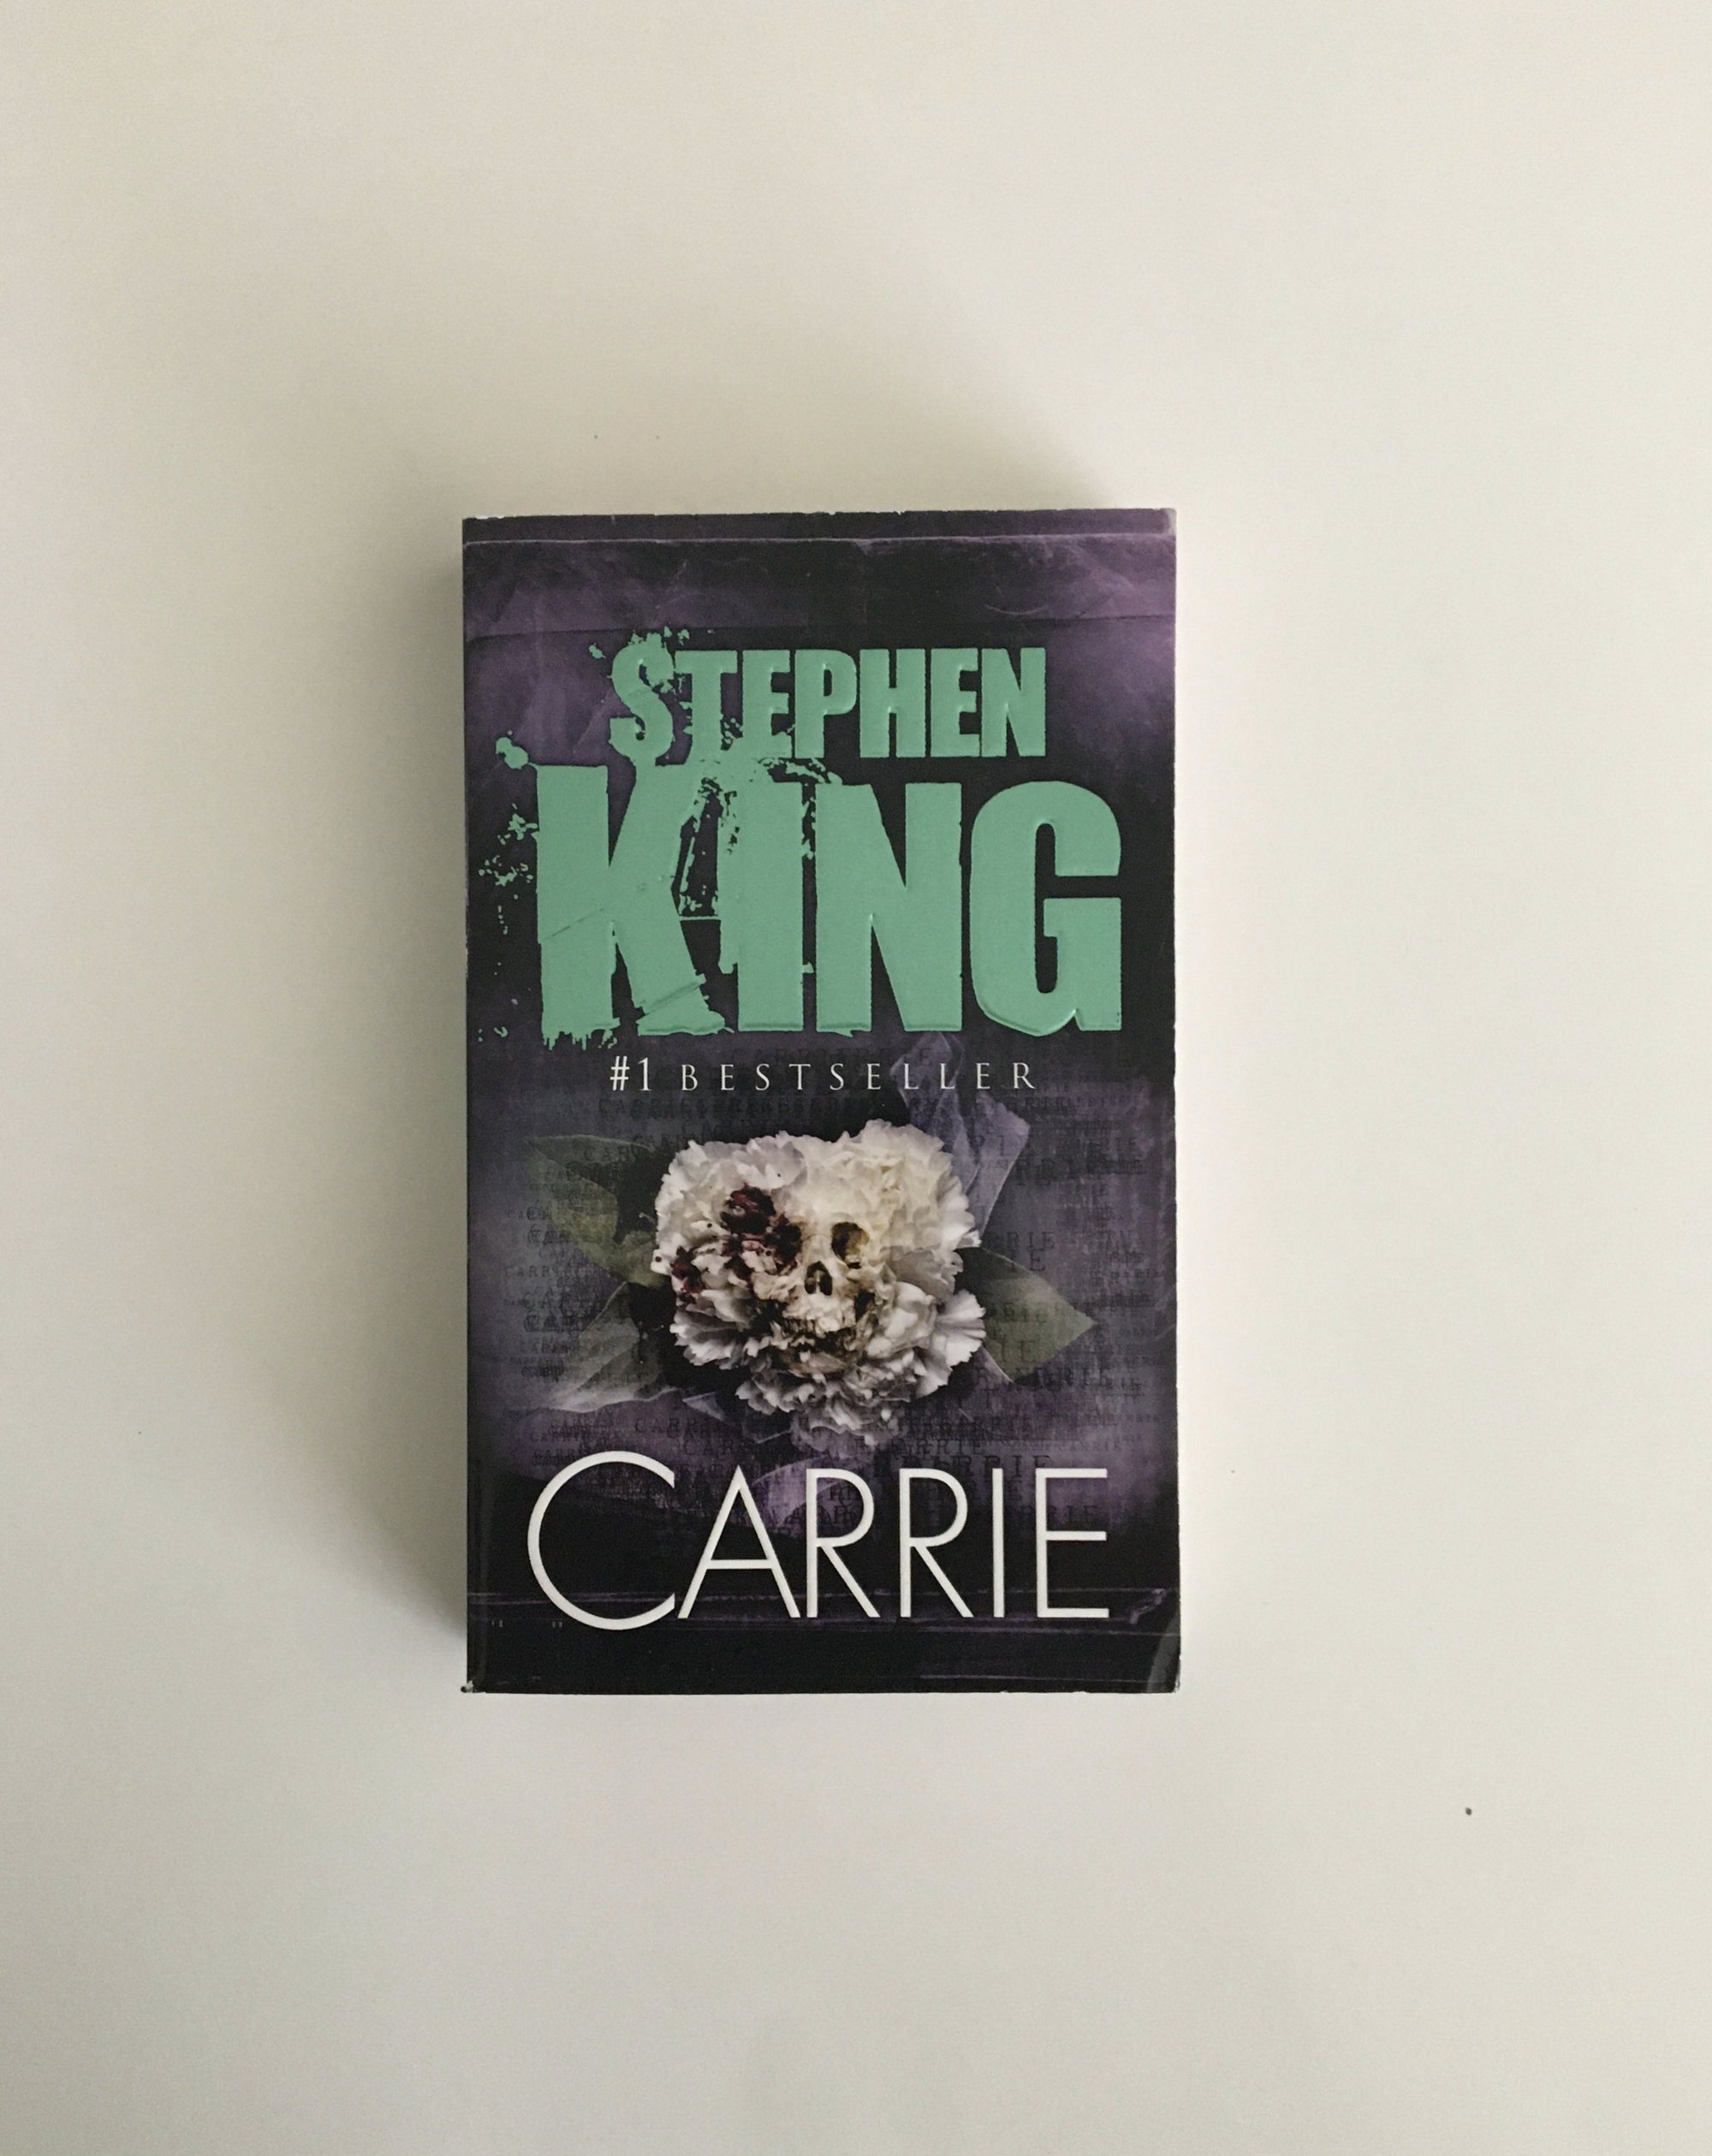 Carrie by Stephen King, book, Ten Dollar Books, Ten Dollar Books